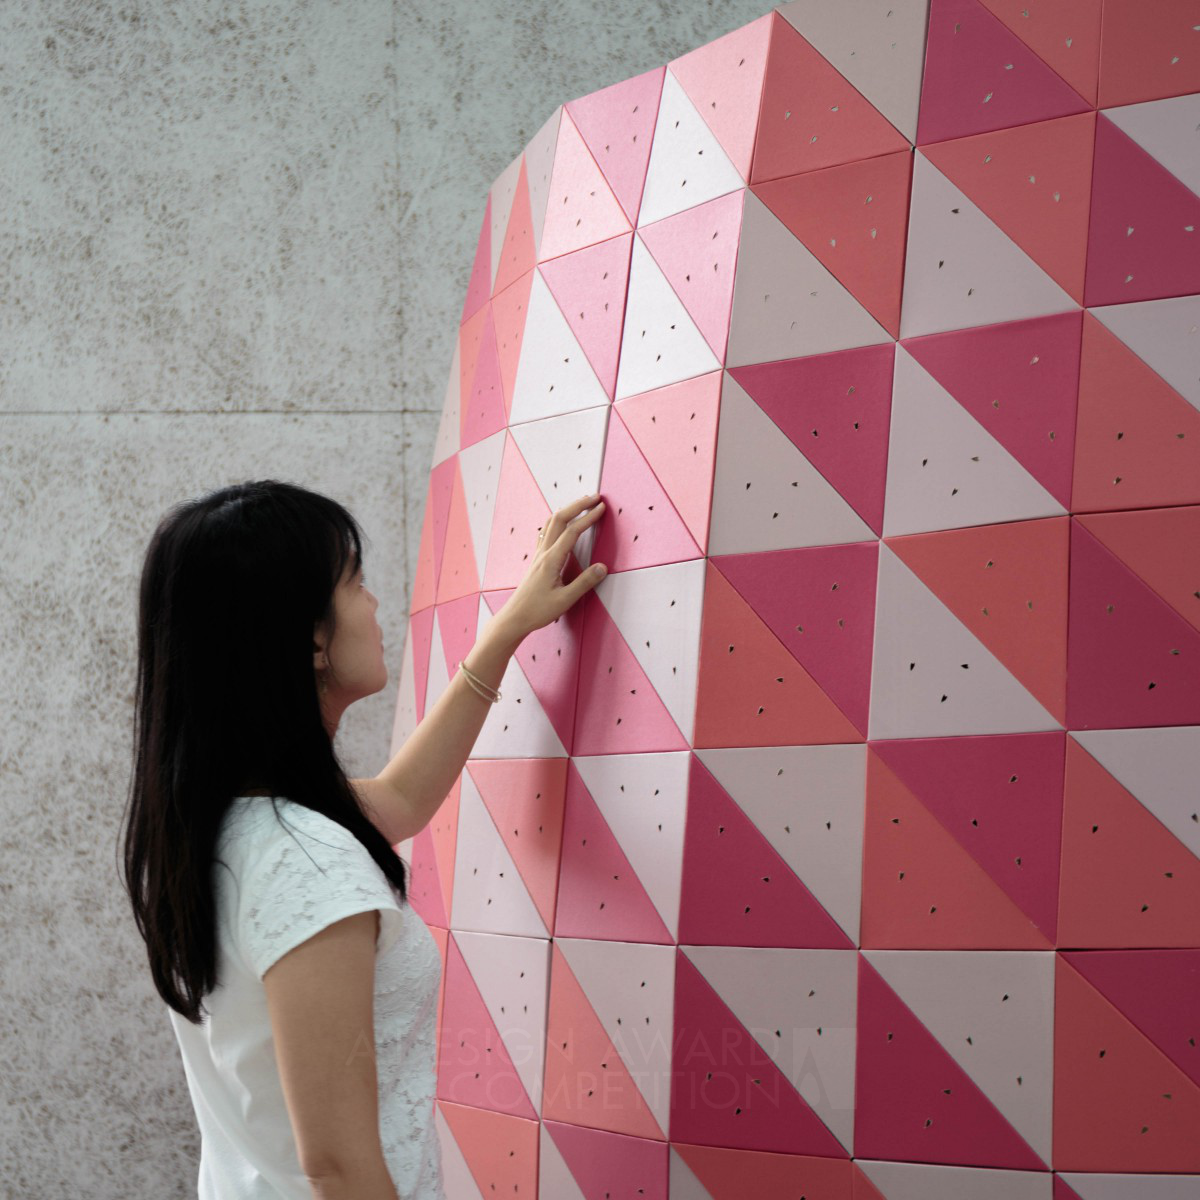 Spiral Pavilion Parametric Cardboard Structure by Daisuke Nagatomo and Minnie Jan Iron Generative, Algorithmic, Parametric and AI-Assisted Design Award Winner 2018 